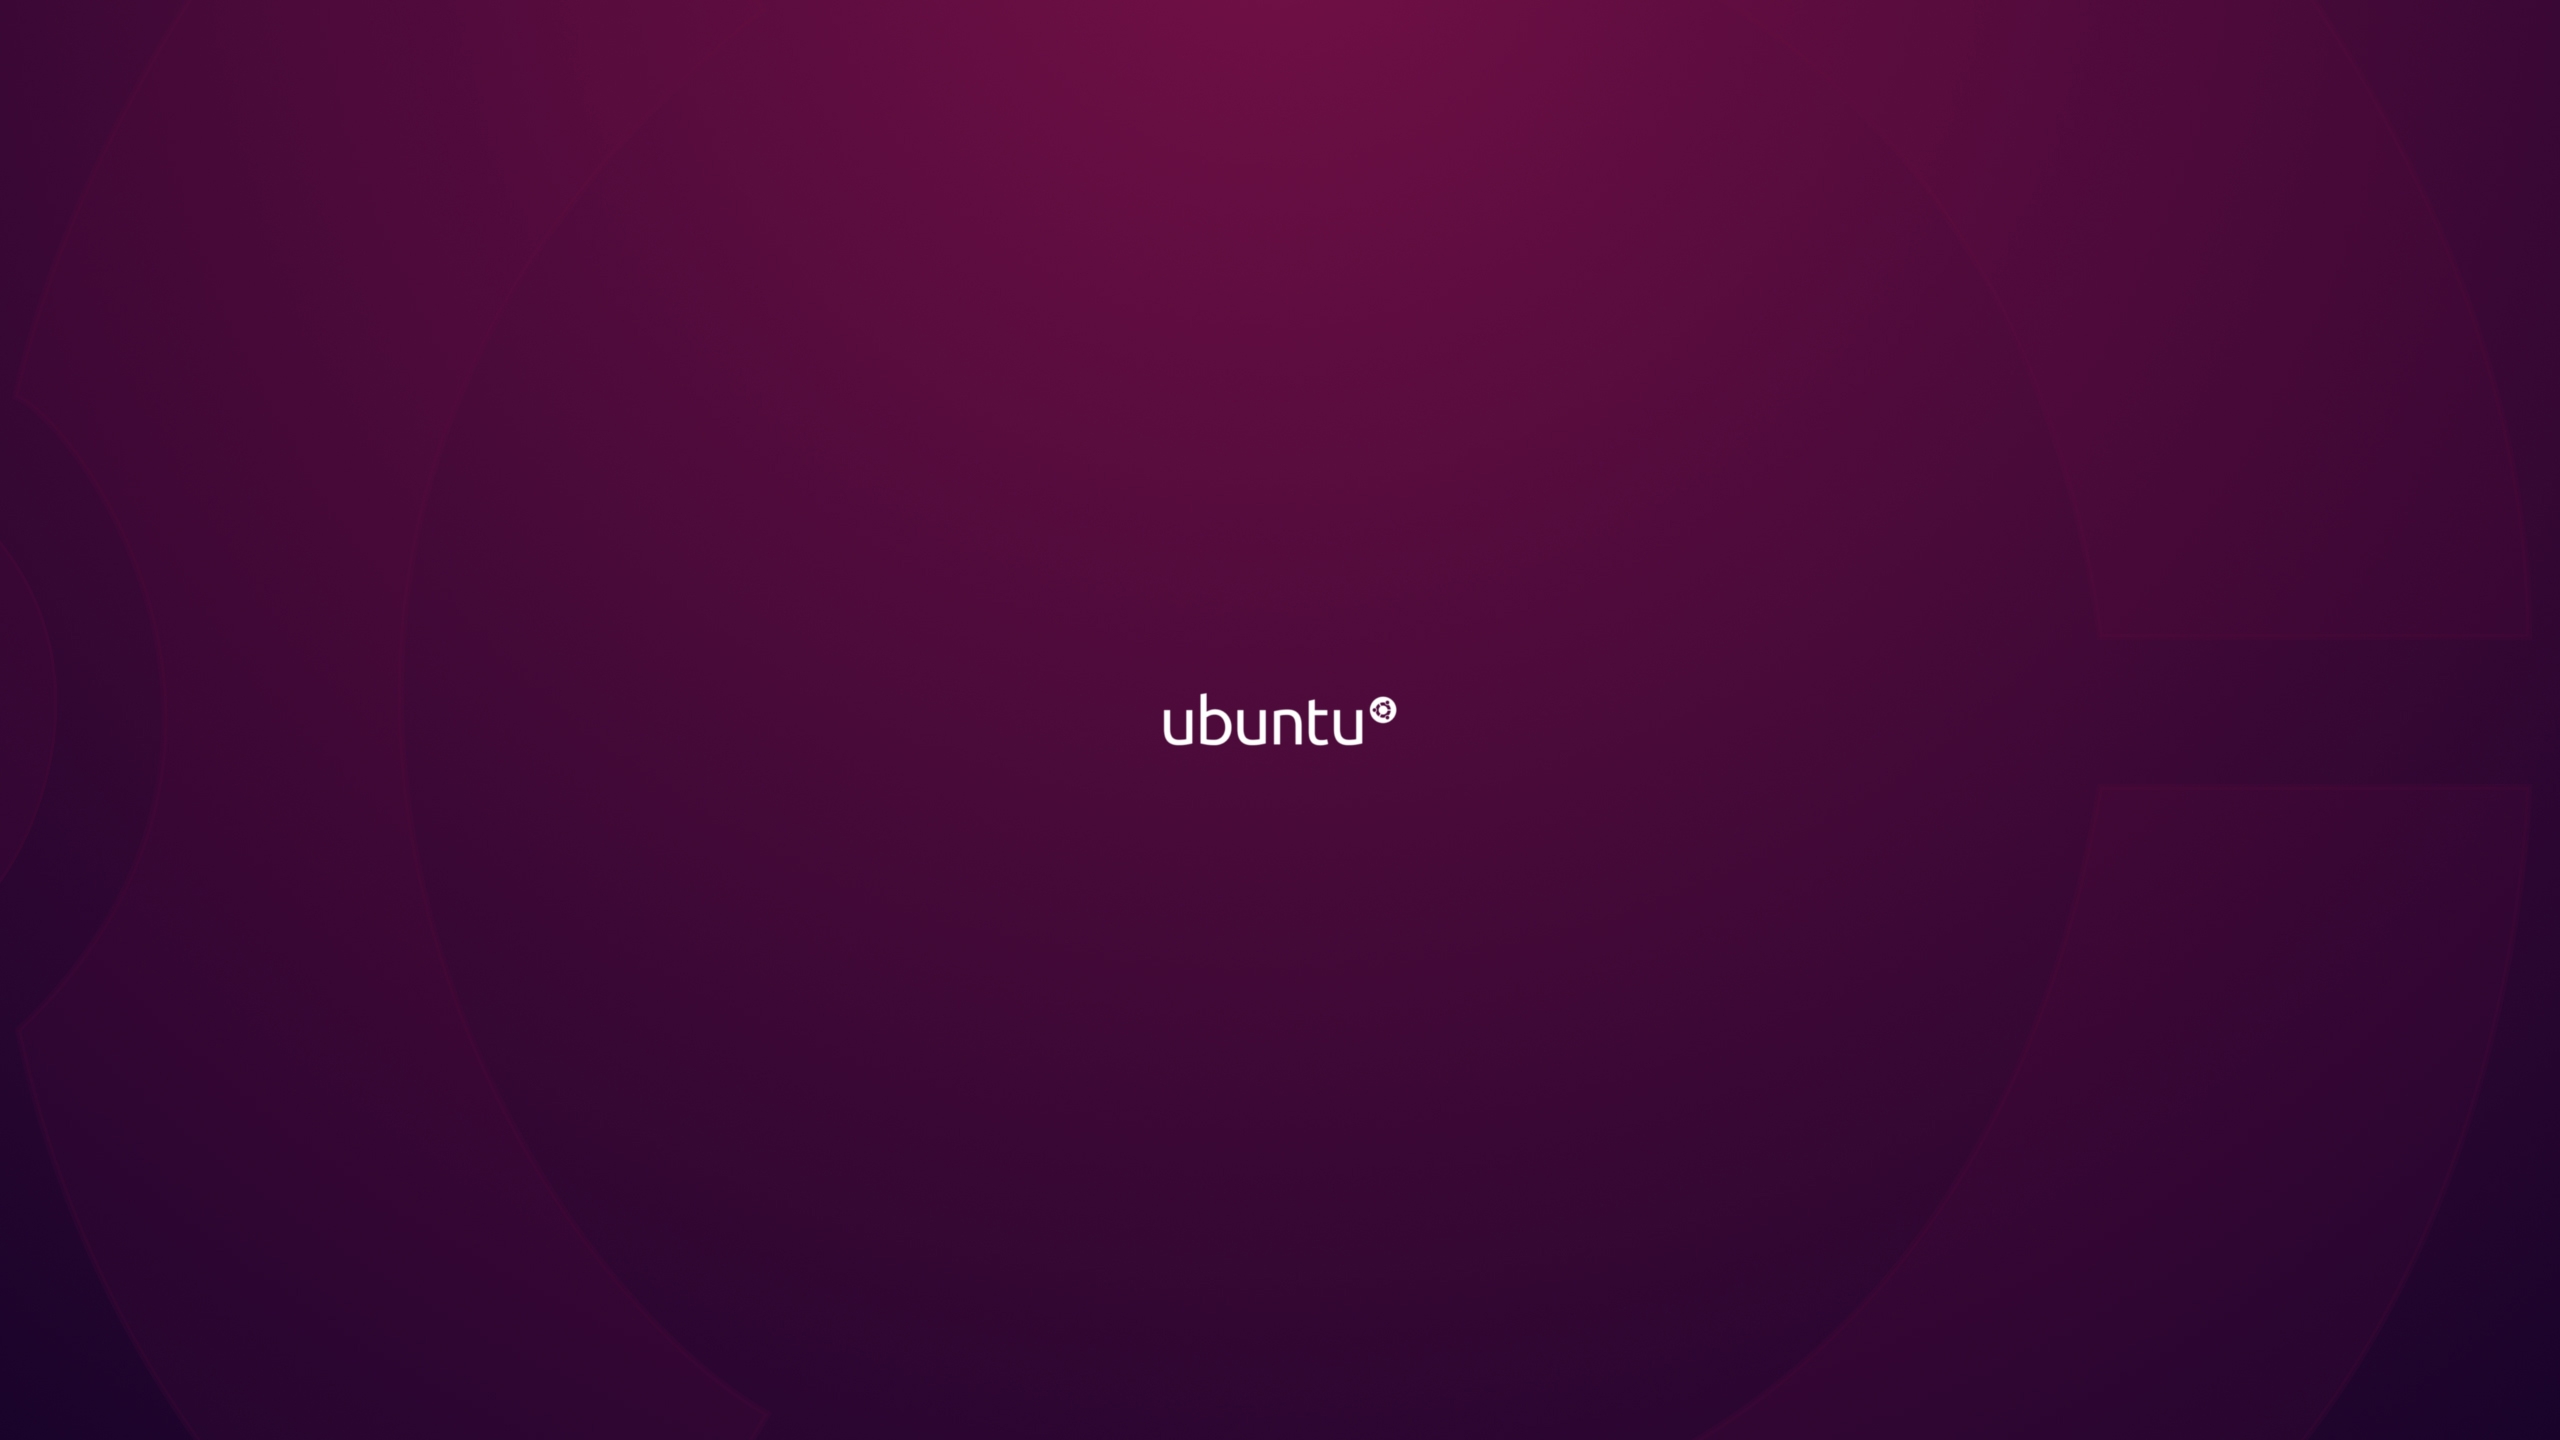 Ubuntu Purple   HQ Wallpapers download 100 high quality 2560x1440